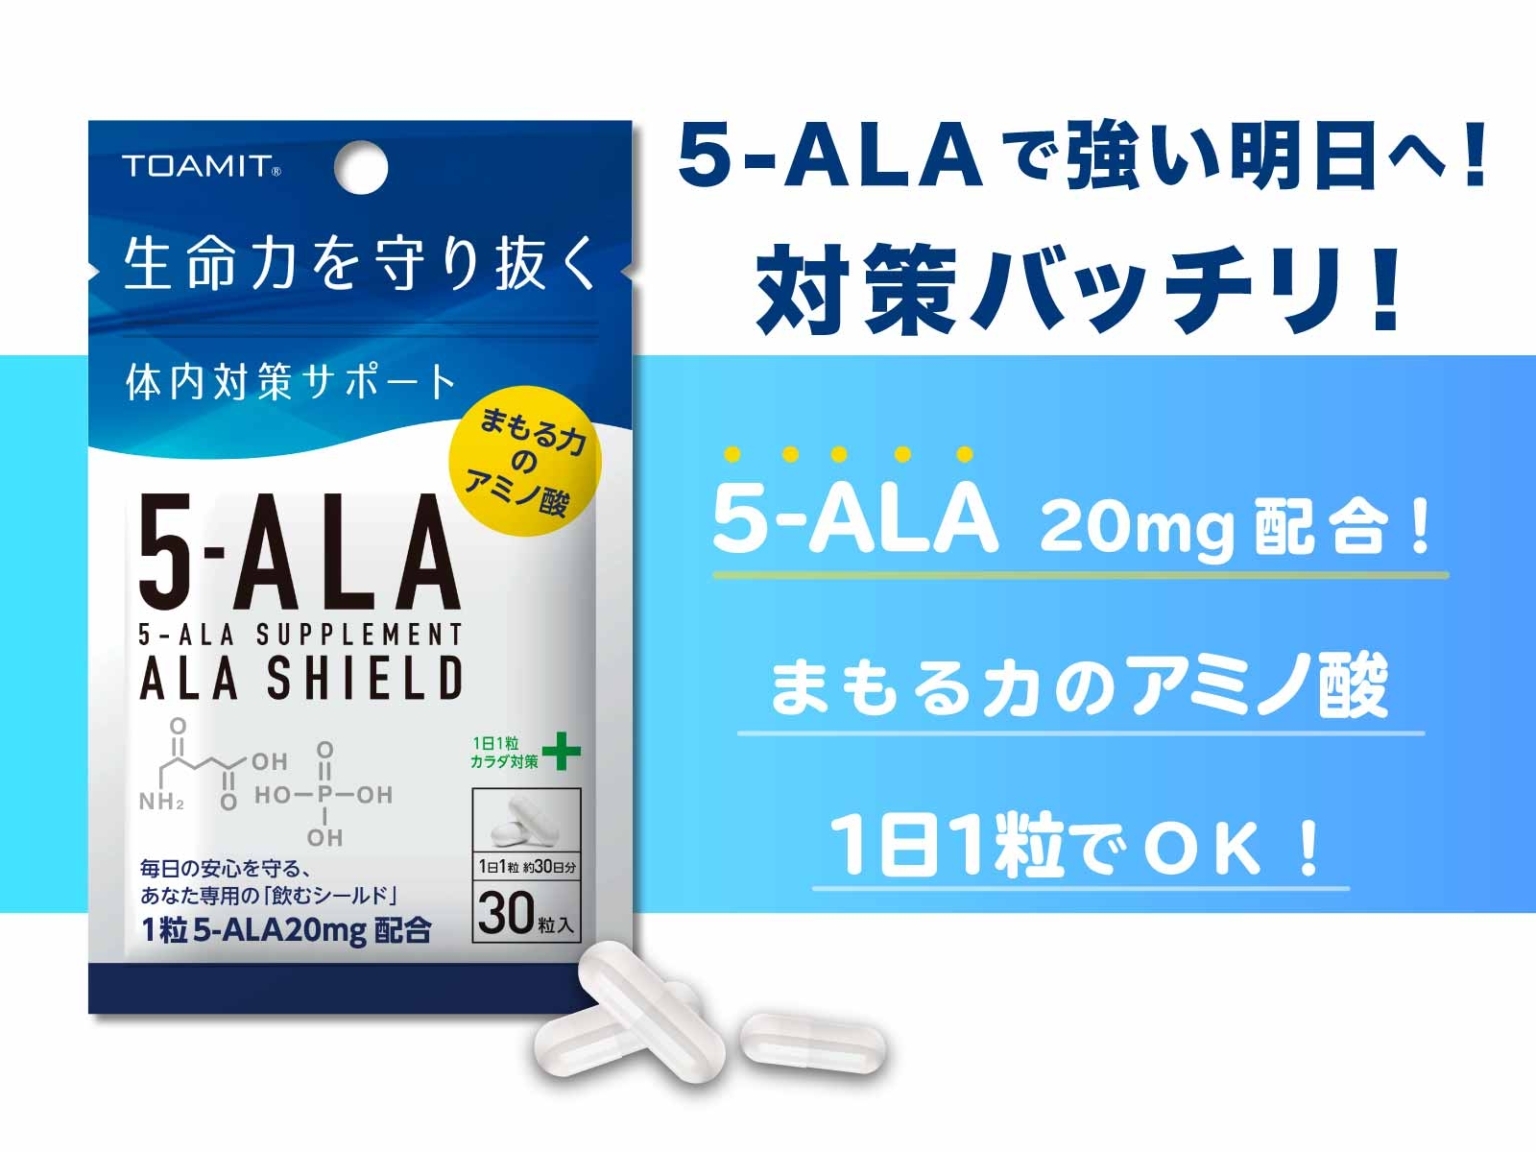 TV情報番組などで話題の商品 安心の日本製 日本製 5-ALAサプリメント 超激得SALE アラシールド 30粒入 約1か月分 アミノ酸 毎日の健康に 出色 MADE JAPAN 飲むシールド IN クエン酸 5-アミノレブリン酸 体内対策サポート